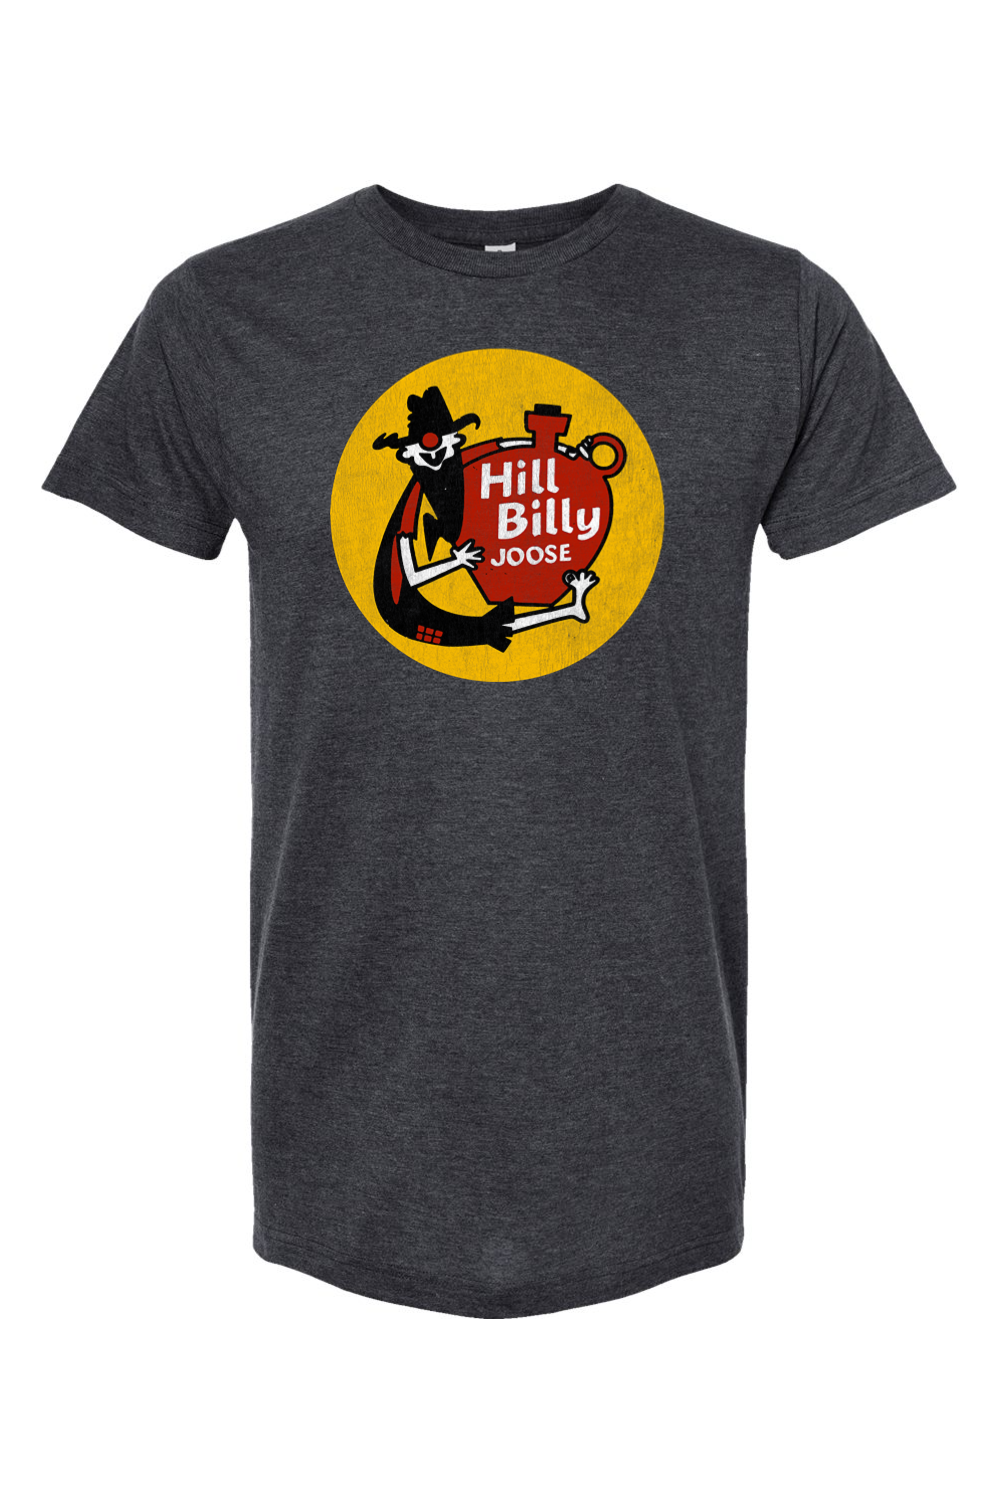 Hill Billy Joose Soda Pop - Yinzylvania